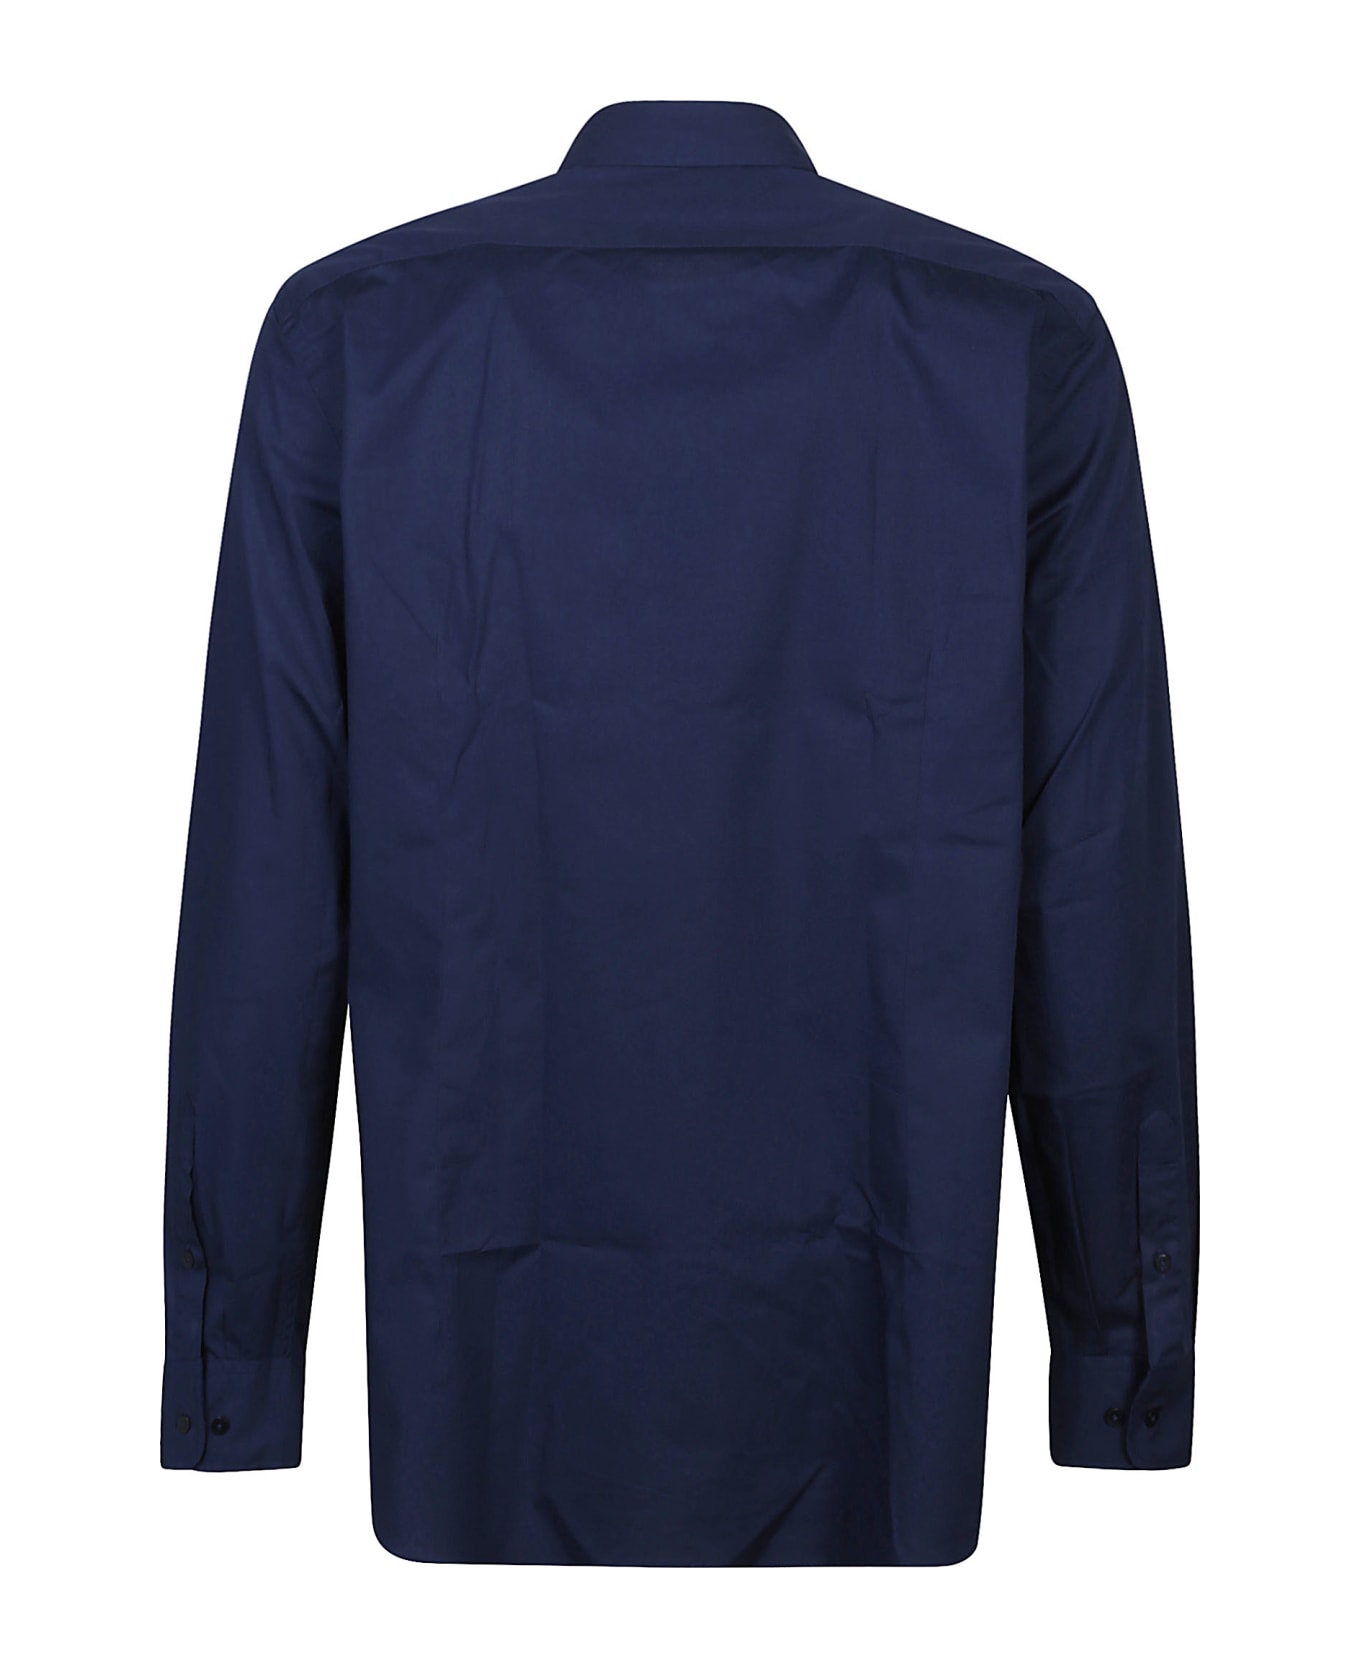 Etro Roma Long Sleeve Shirt - Blu Navy シャツ